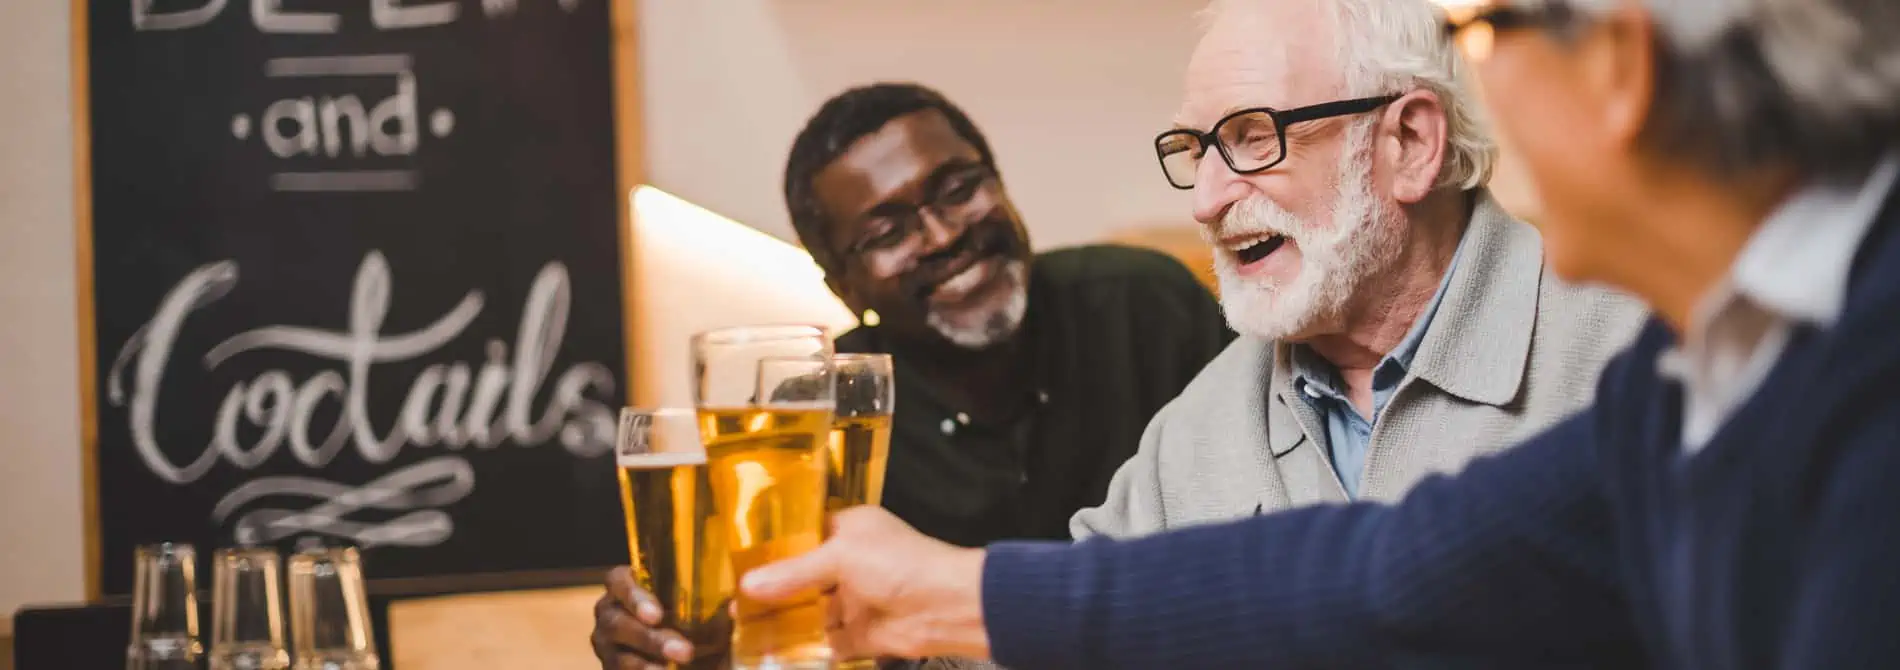 Group of older adult men drinking at a bar